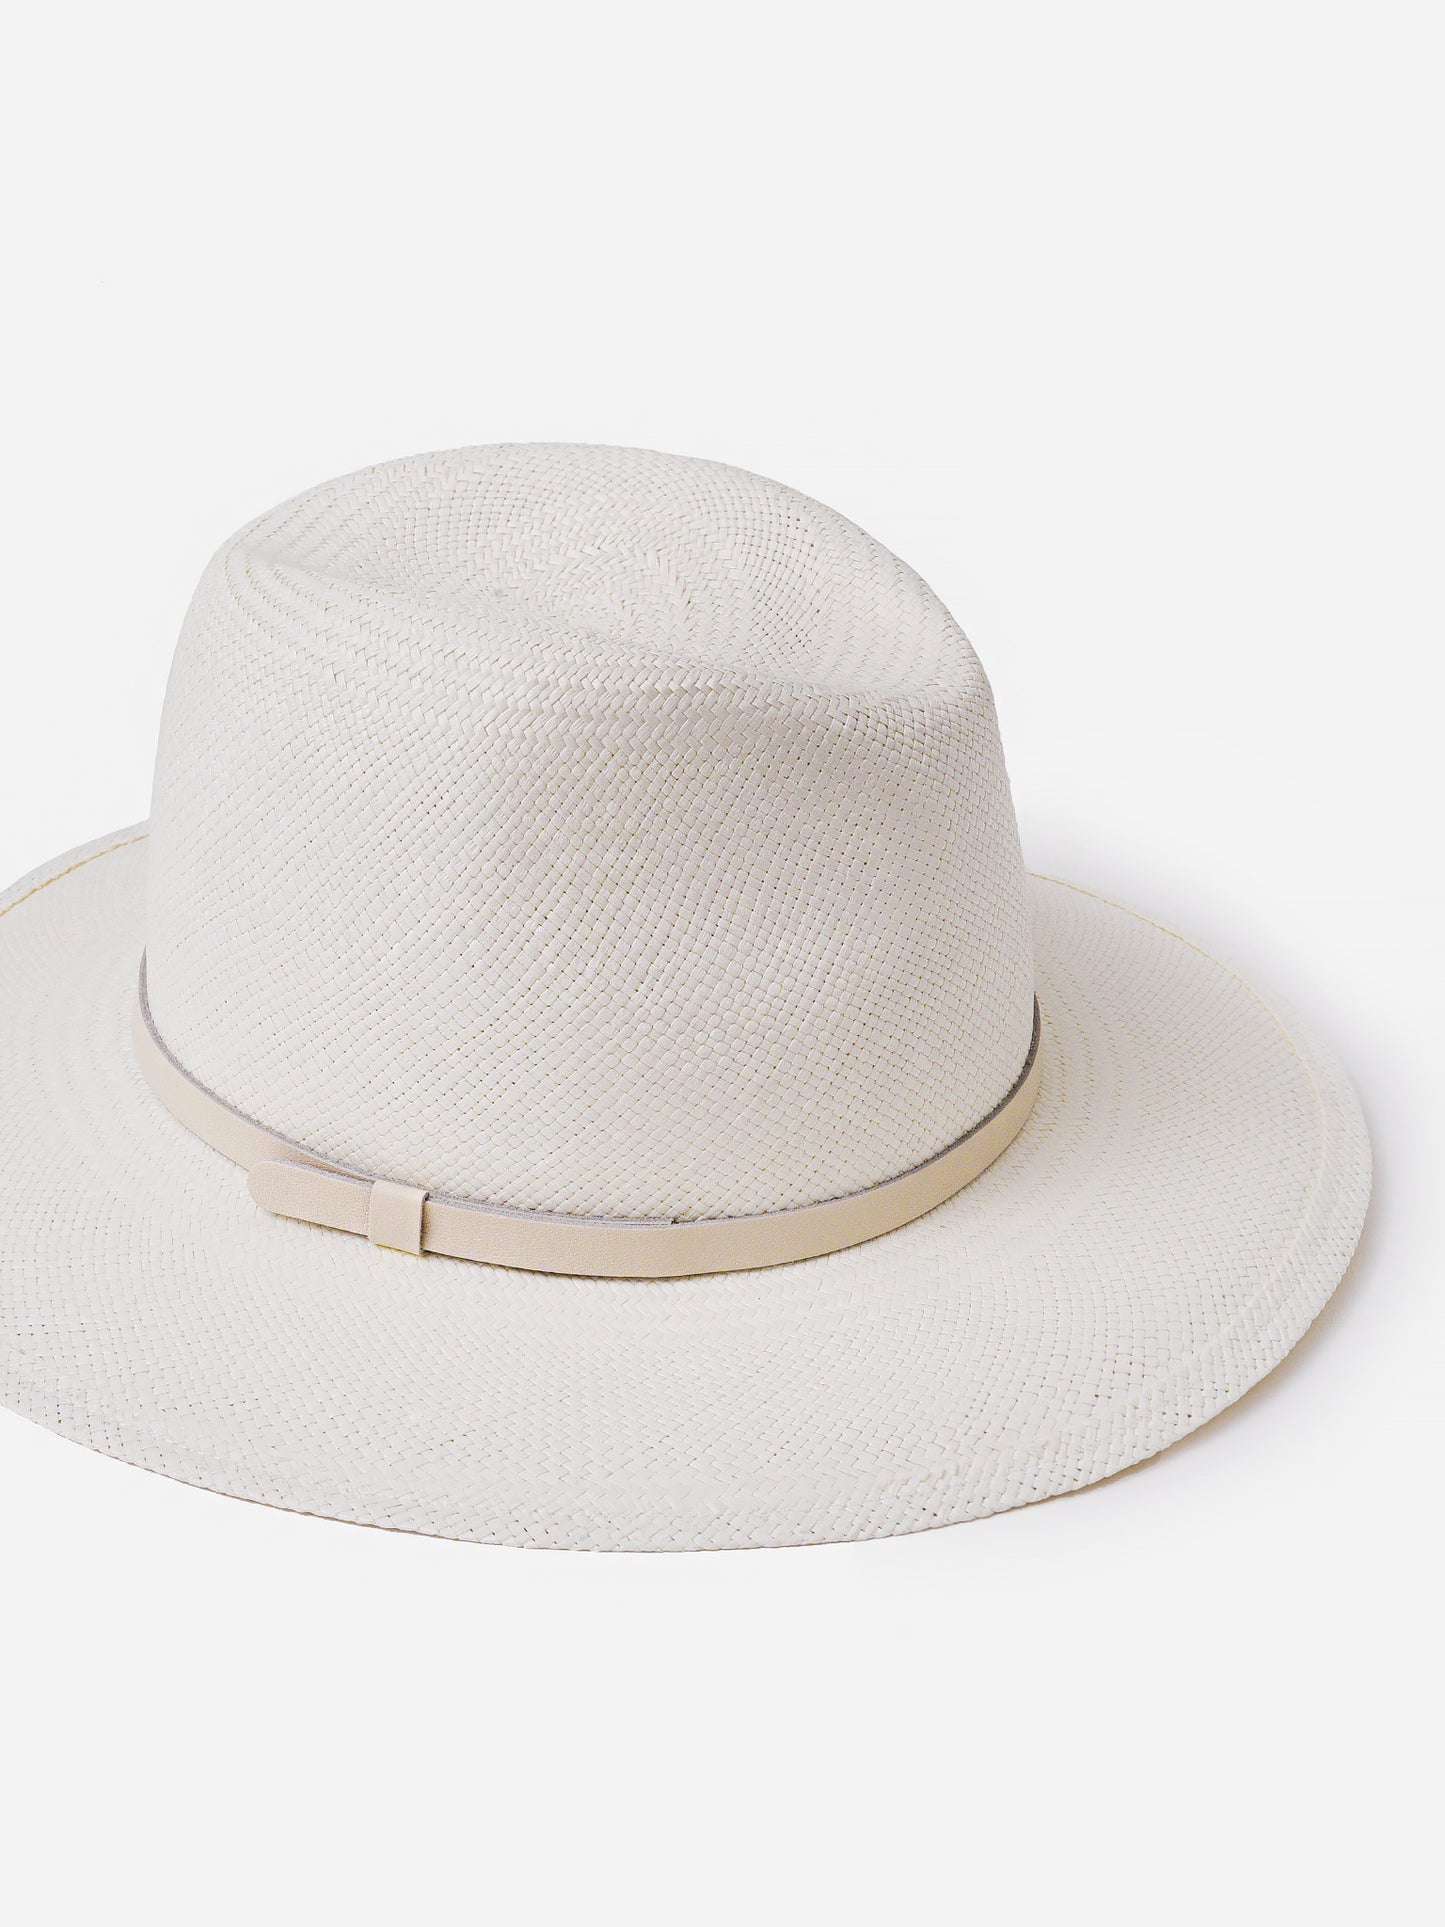 Hat Attack Women's Panama Continental Hat